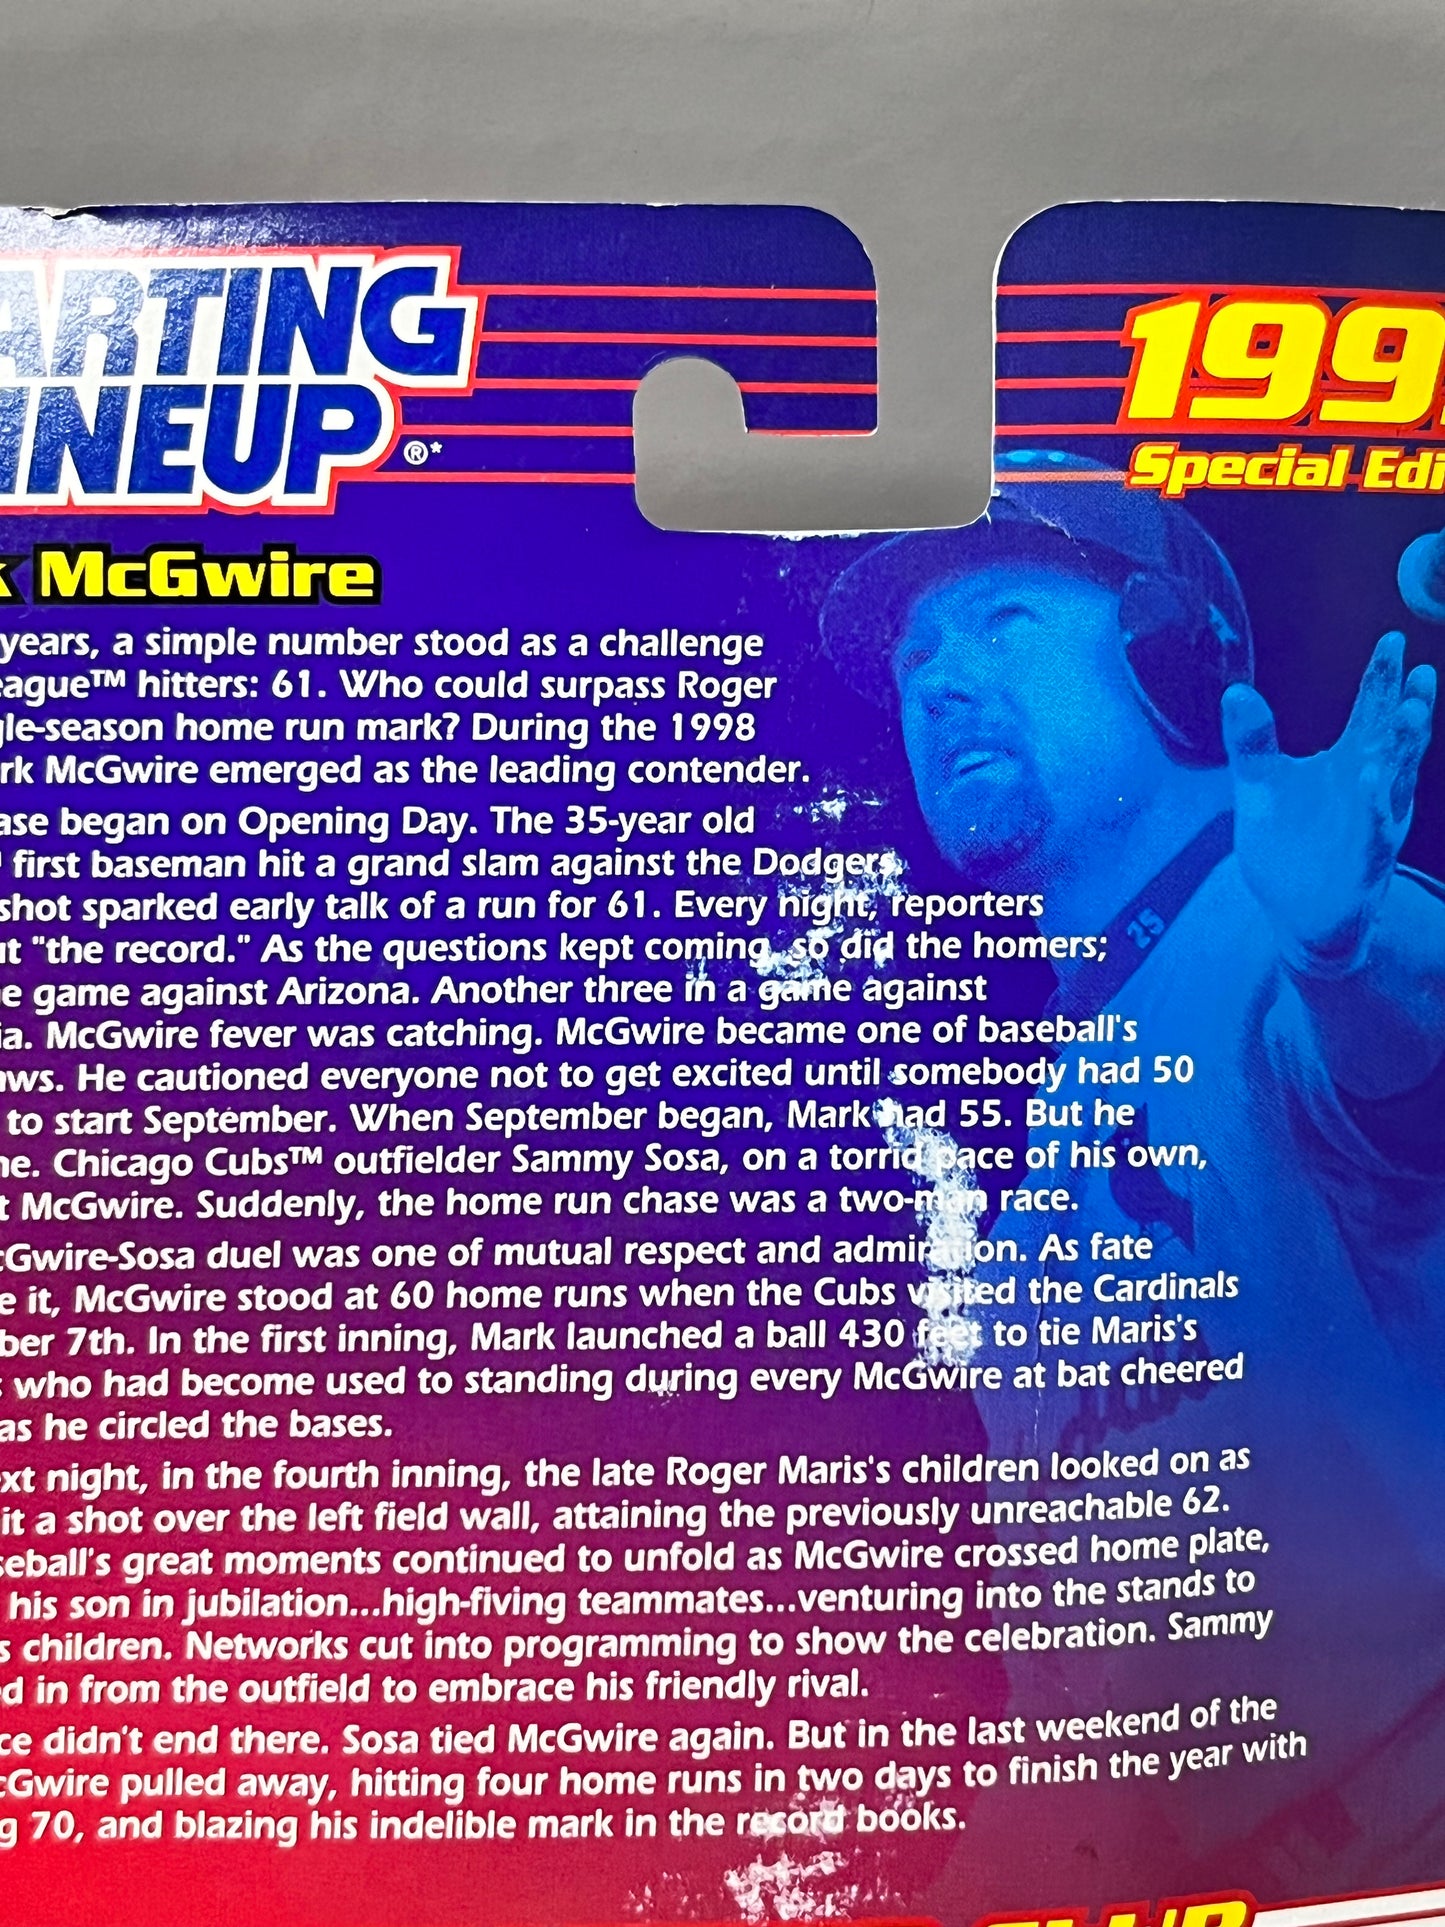 1999 Starting Line Up Mark McGwire Sports Superstar